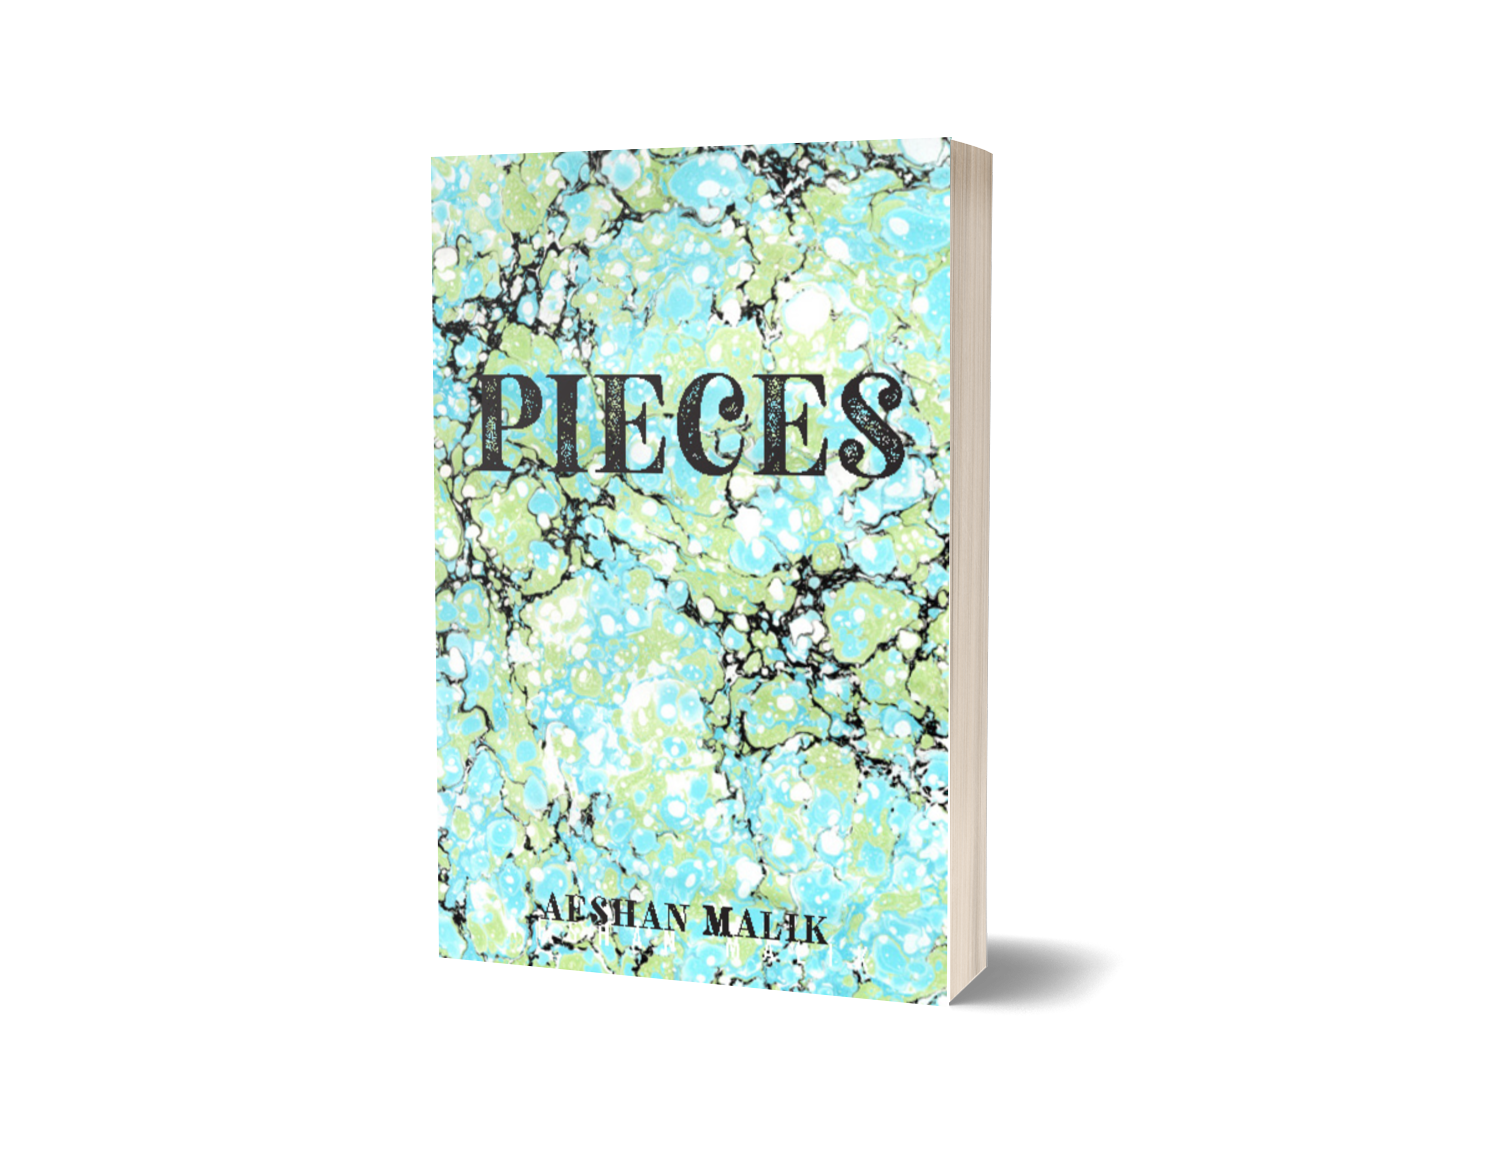 Pieces book